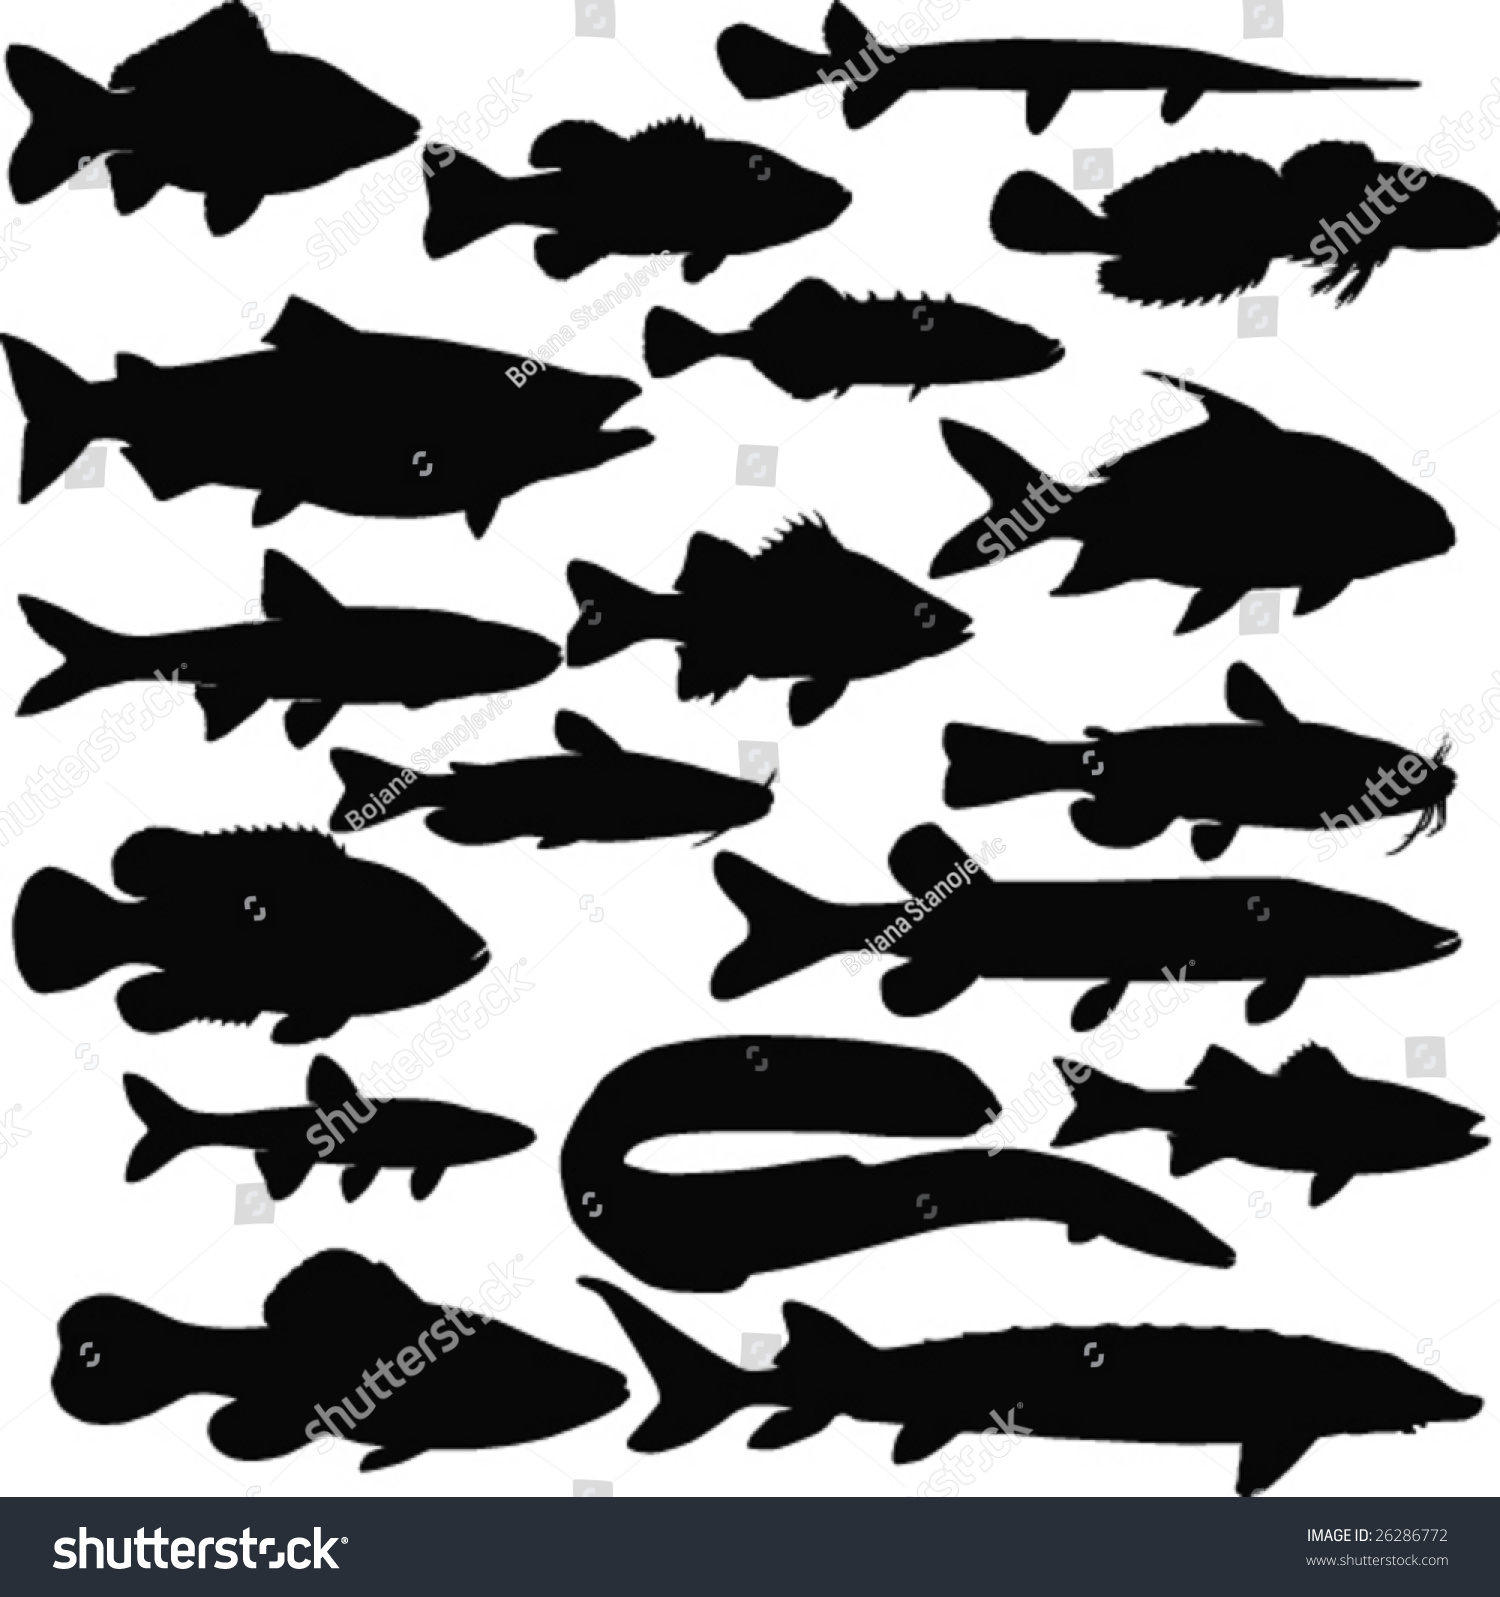 vector free download fish - photo #44